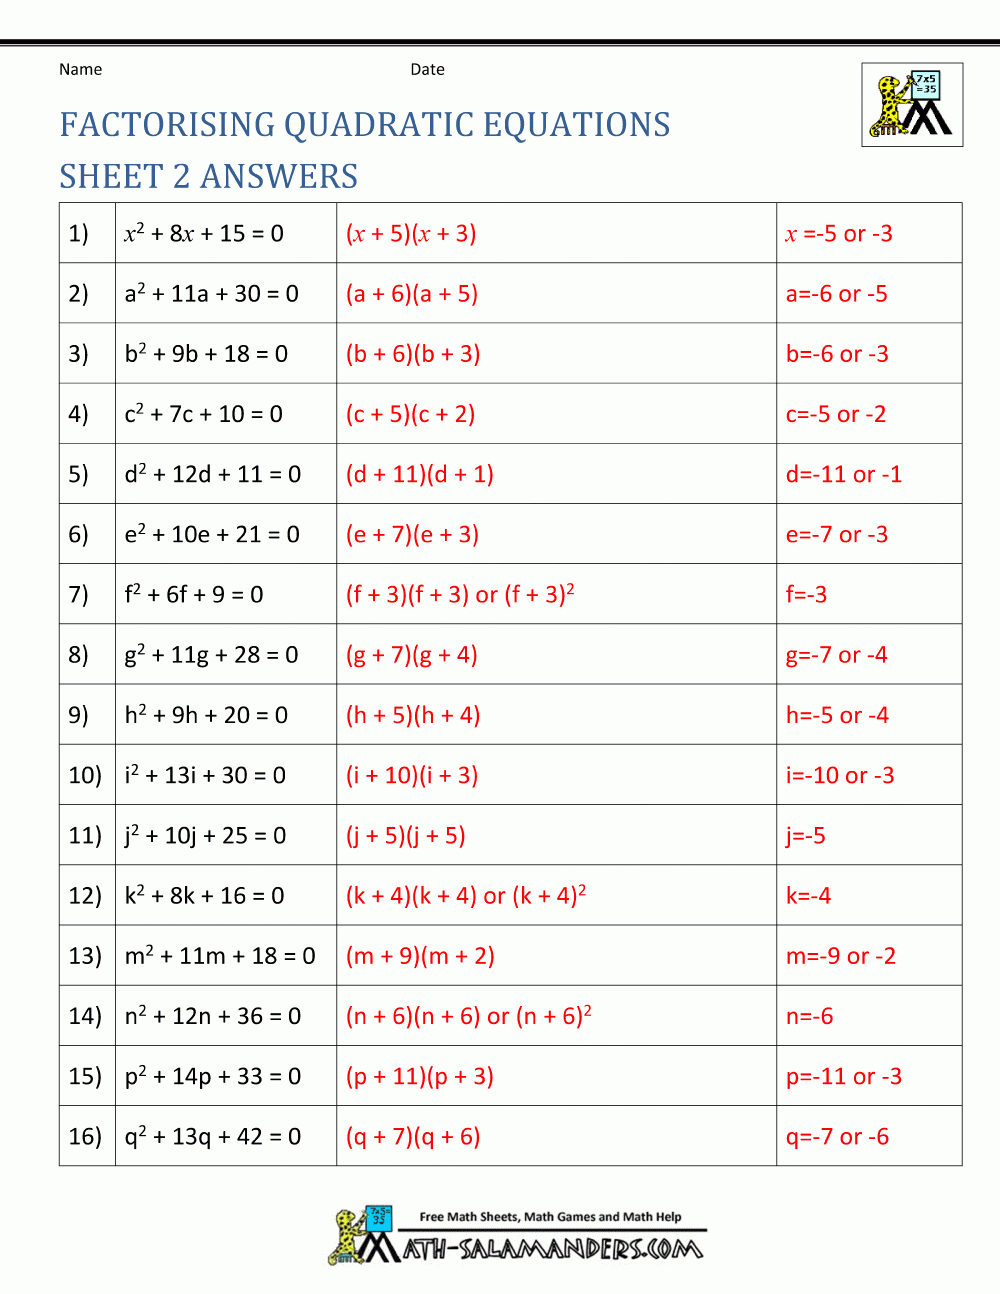 Factoring Quadratic Equations For Quadratic Formula Worksheet With Answers Pdf